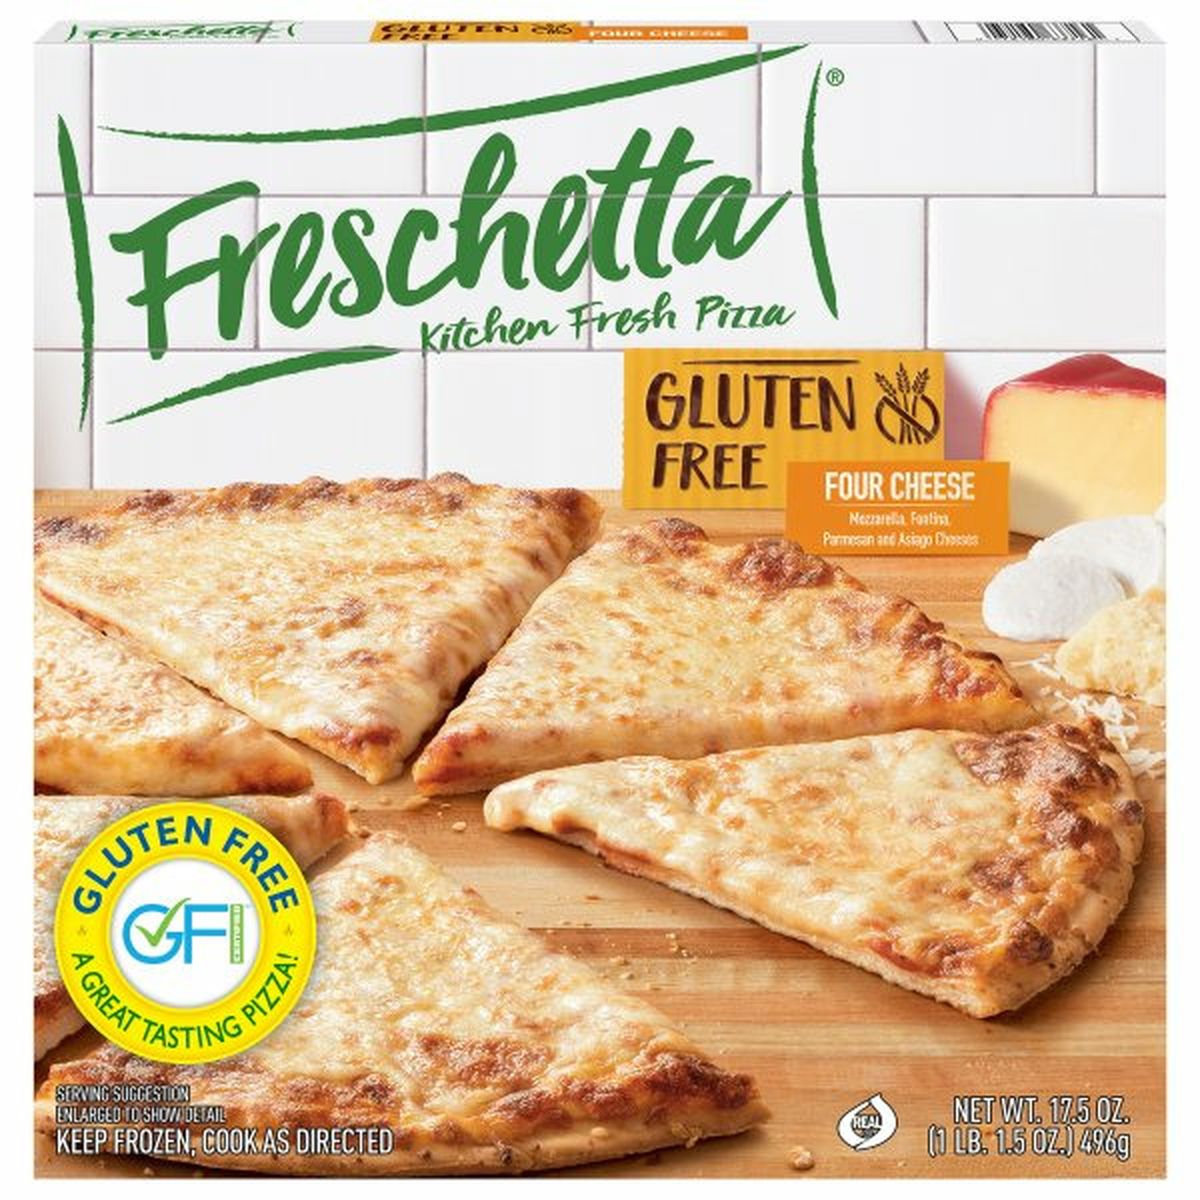 Calories in Freschetta Pizza, Gluten Free, Four Cheese